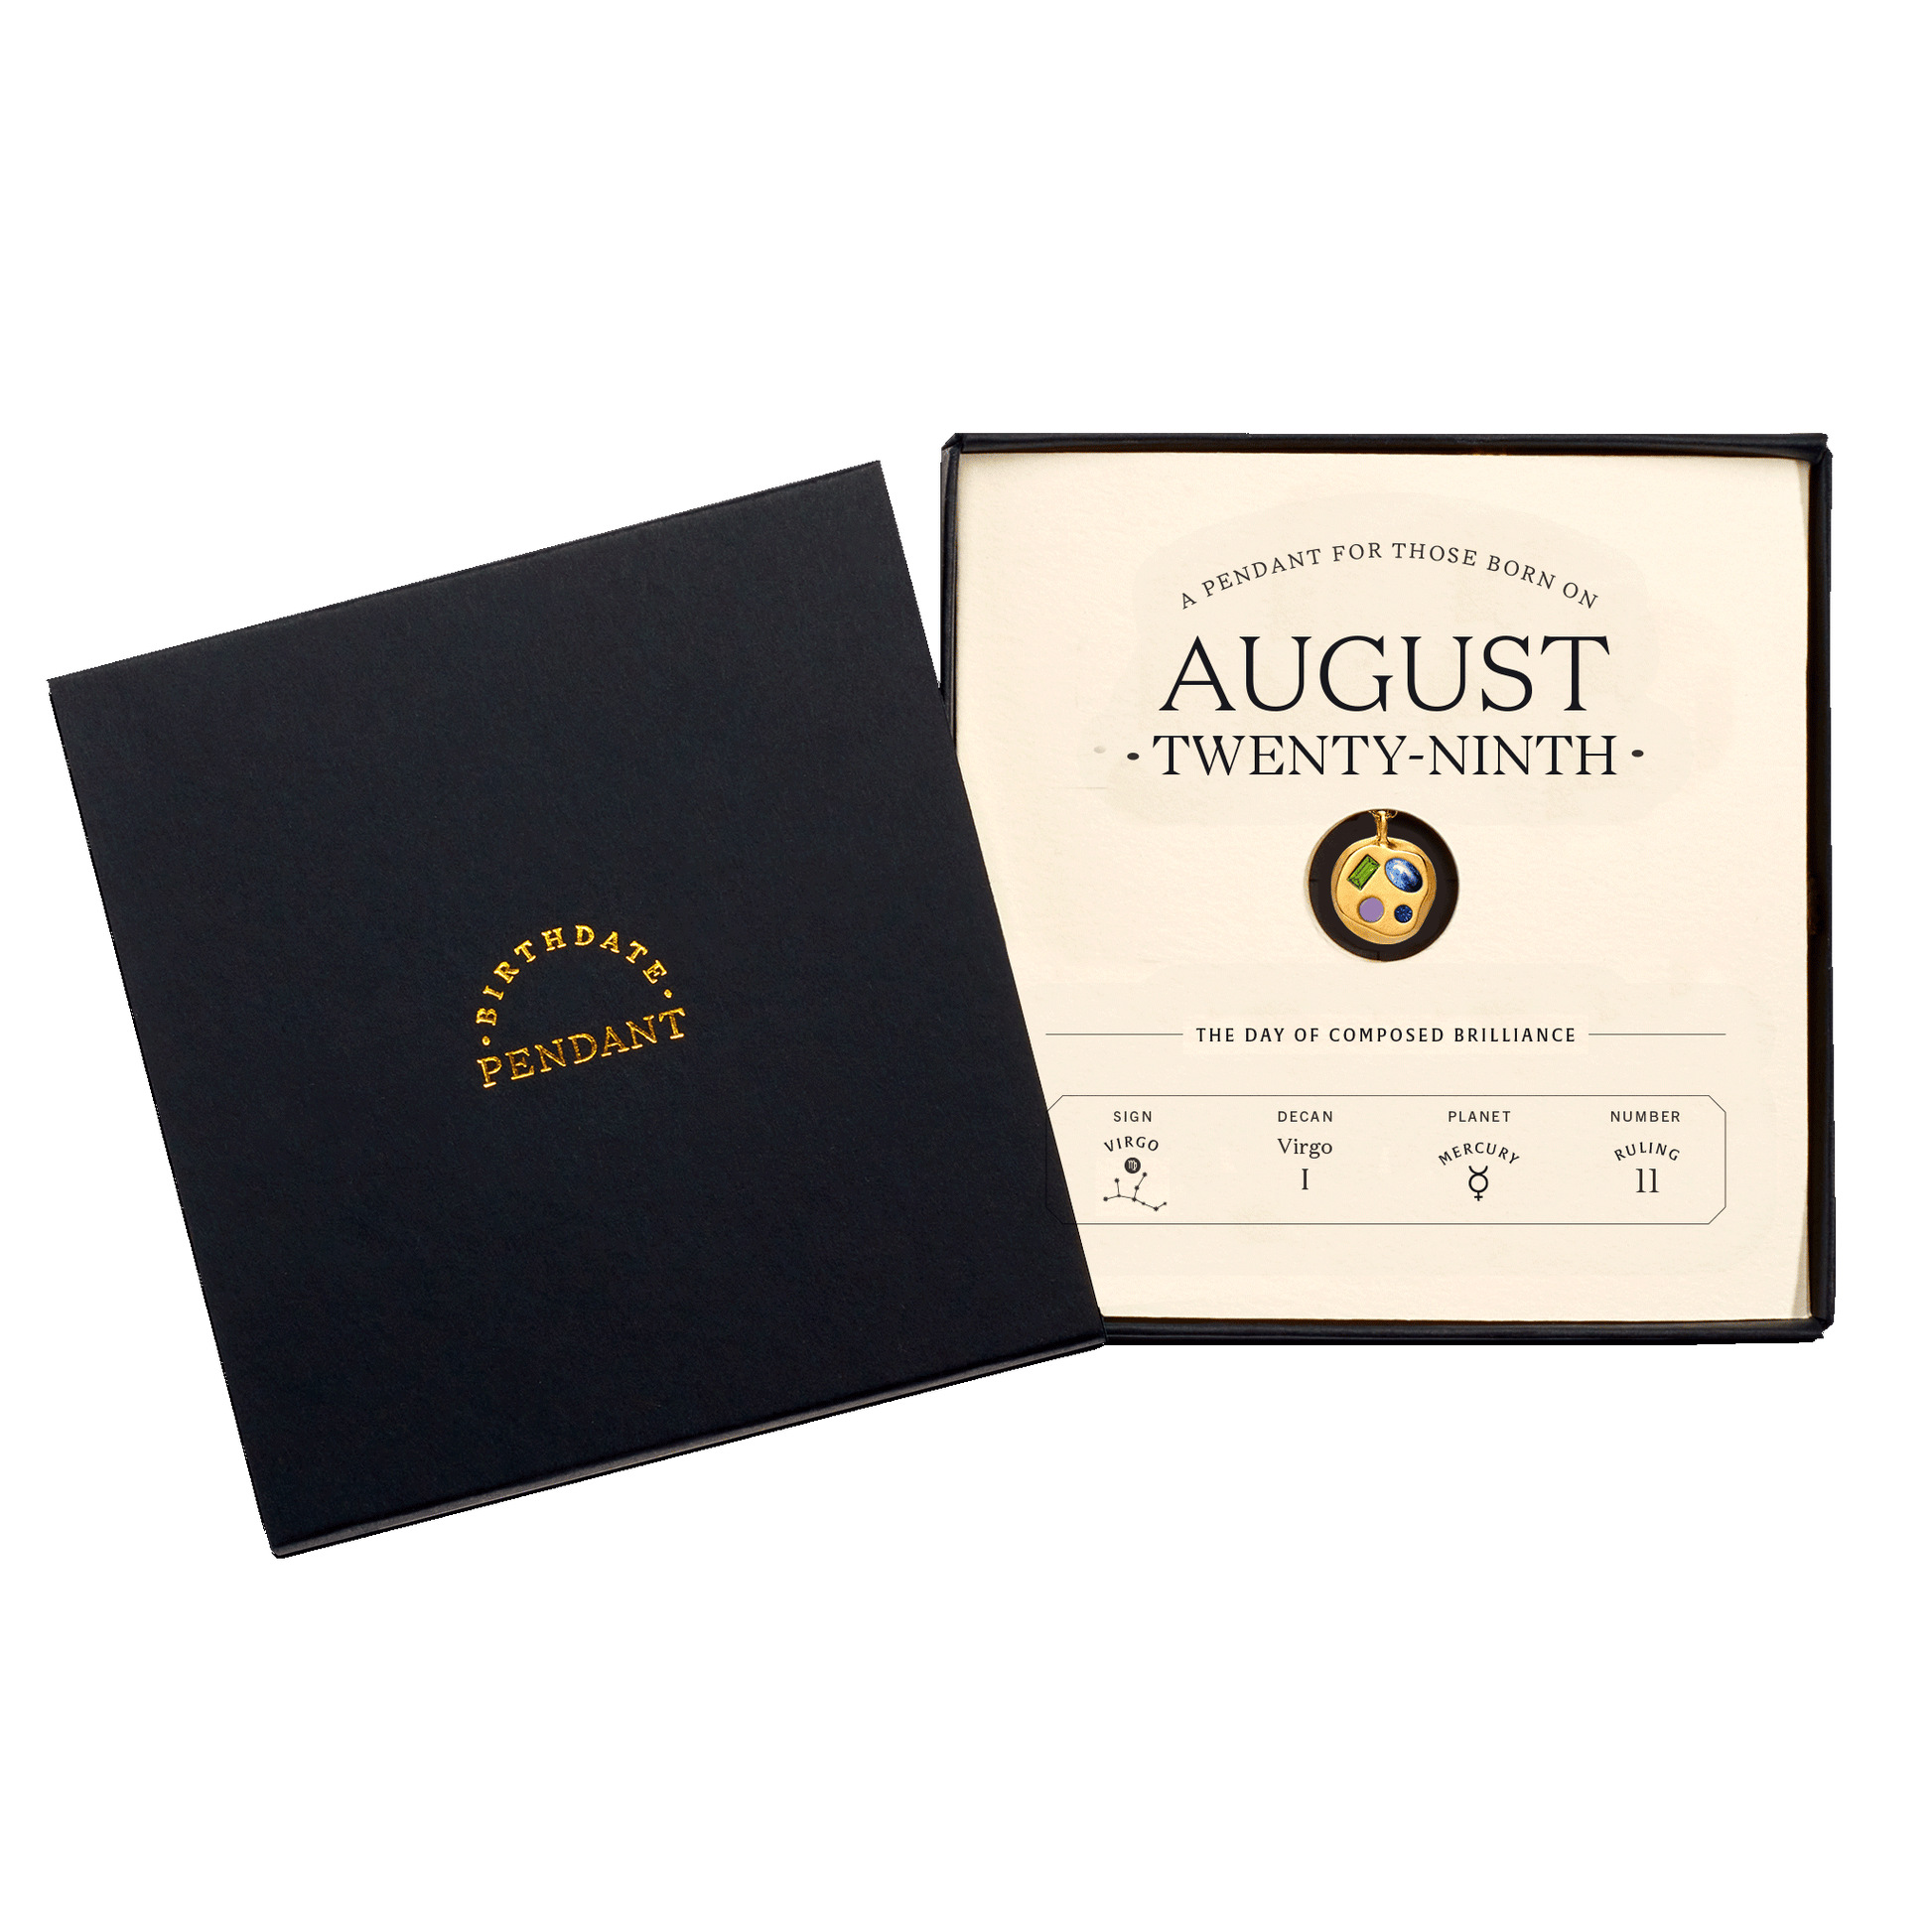 The August Twenty-Ninth Pendant inside its box